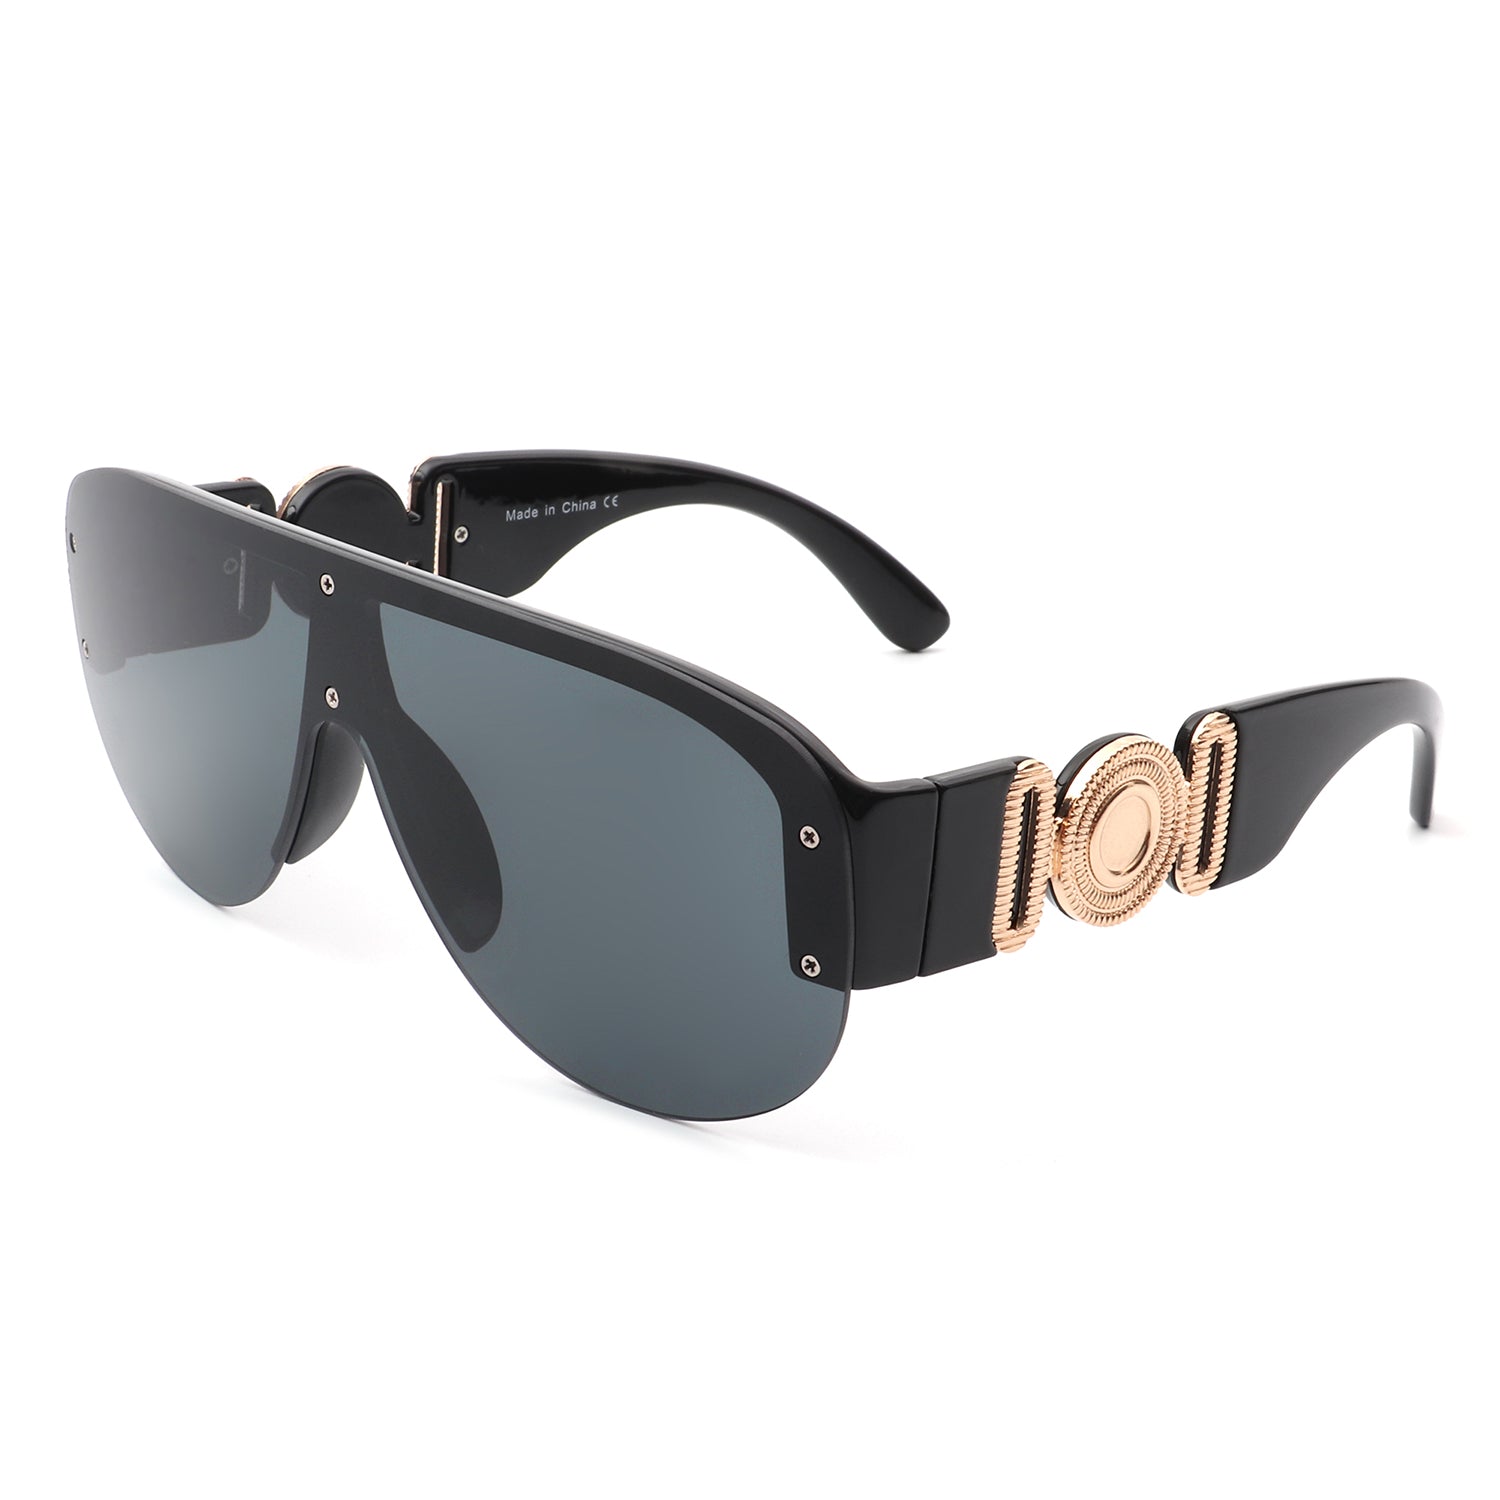 S2102 - Classic Half Frame Retro Oversize Vintage Fashion Aviator Sunglasses